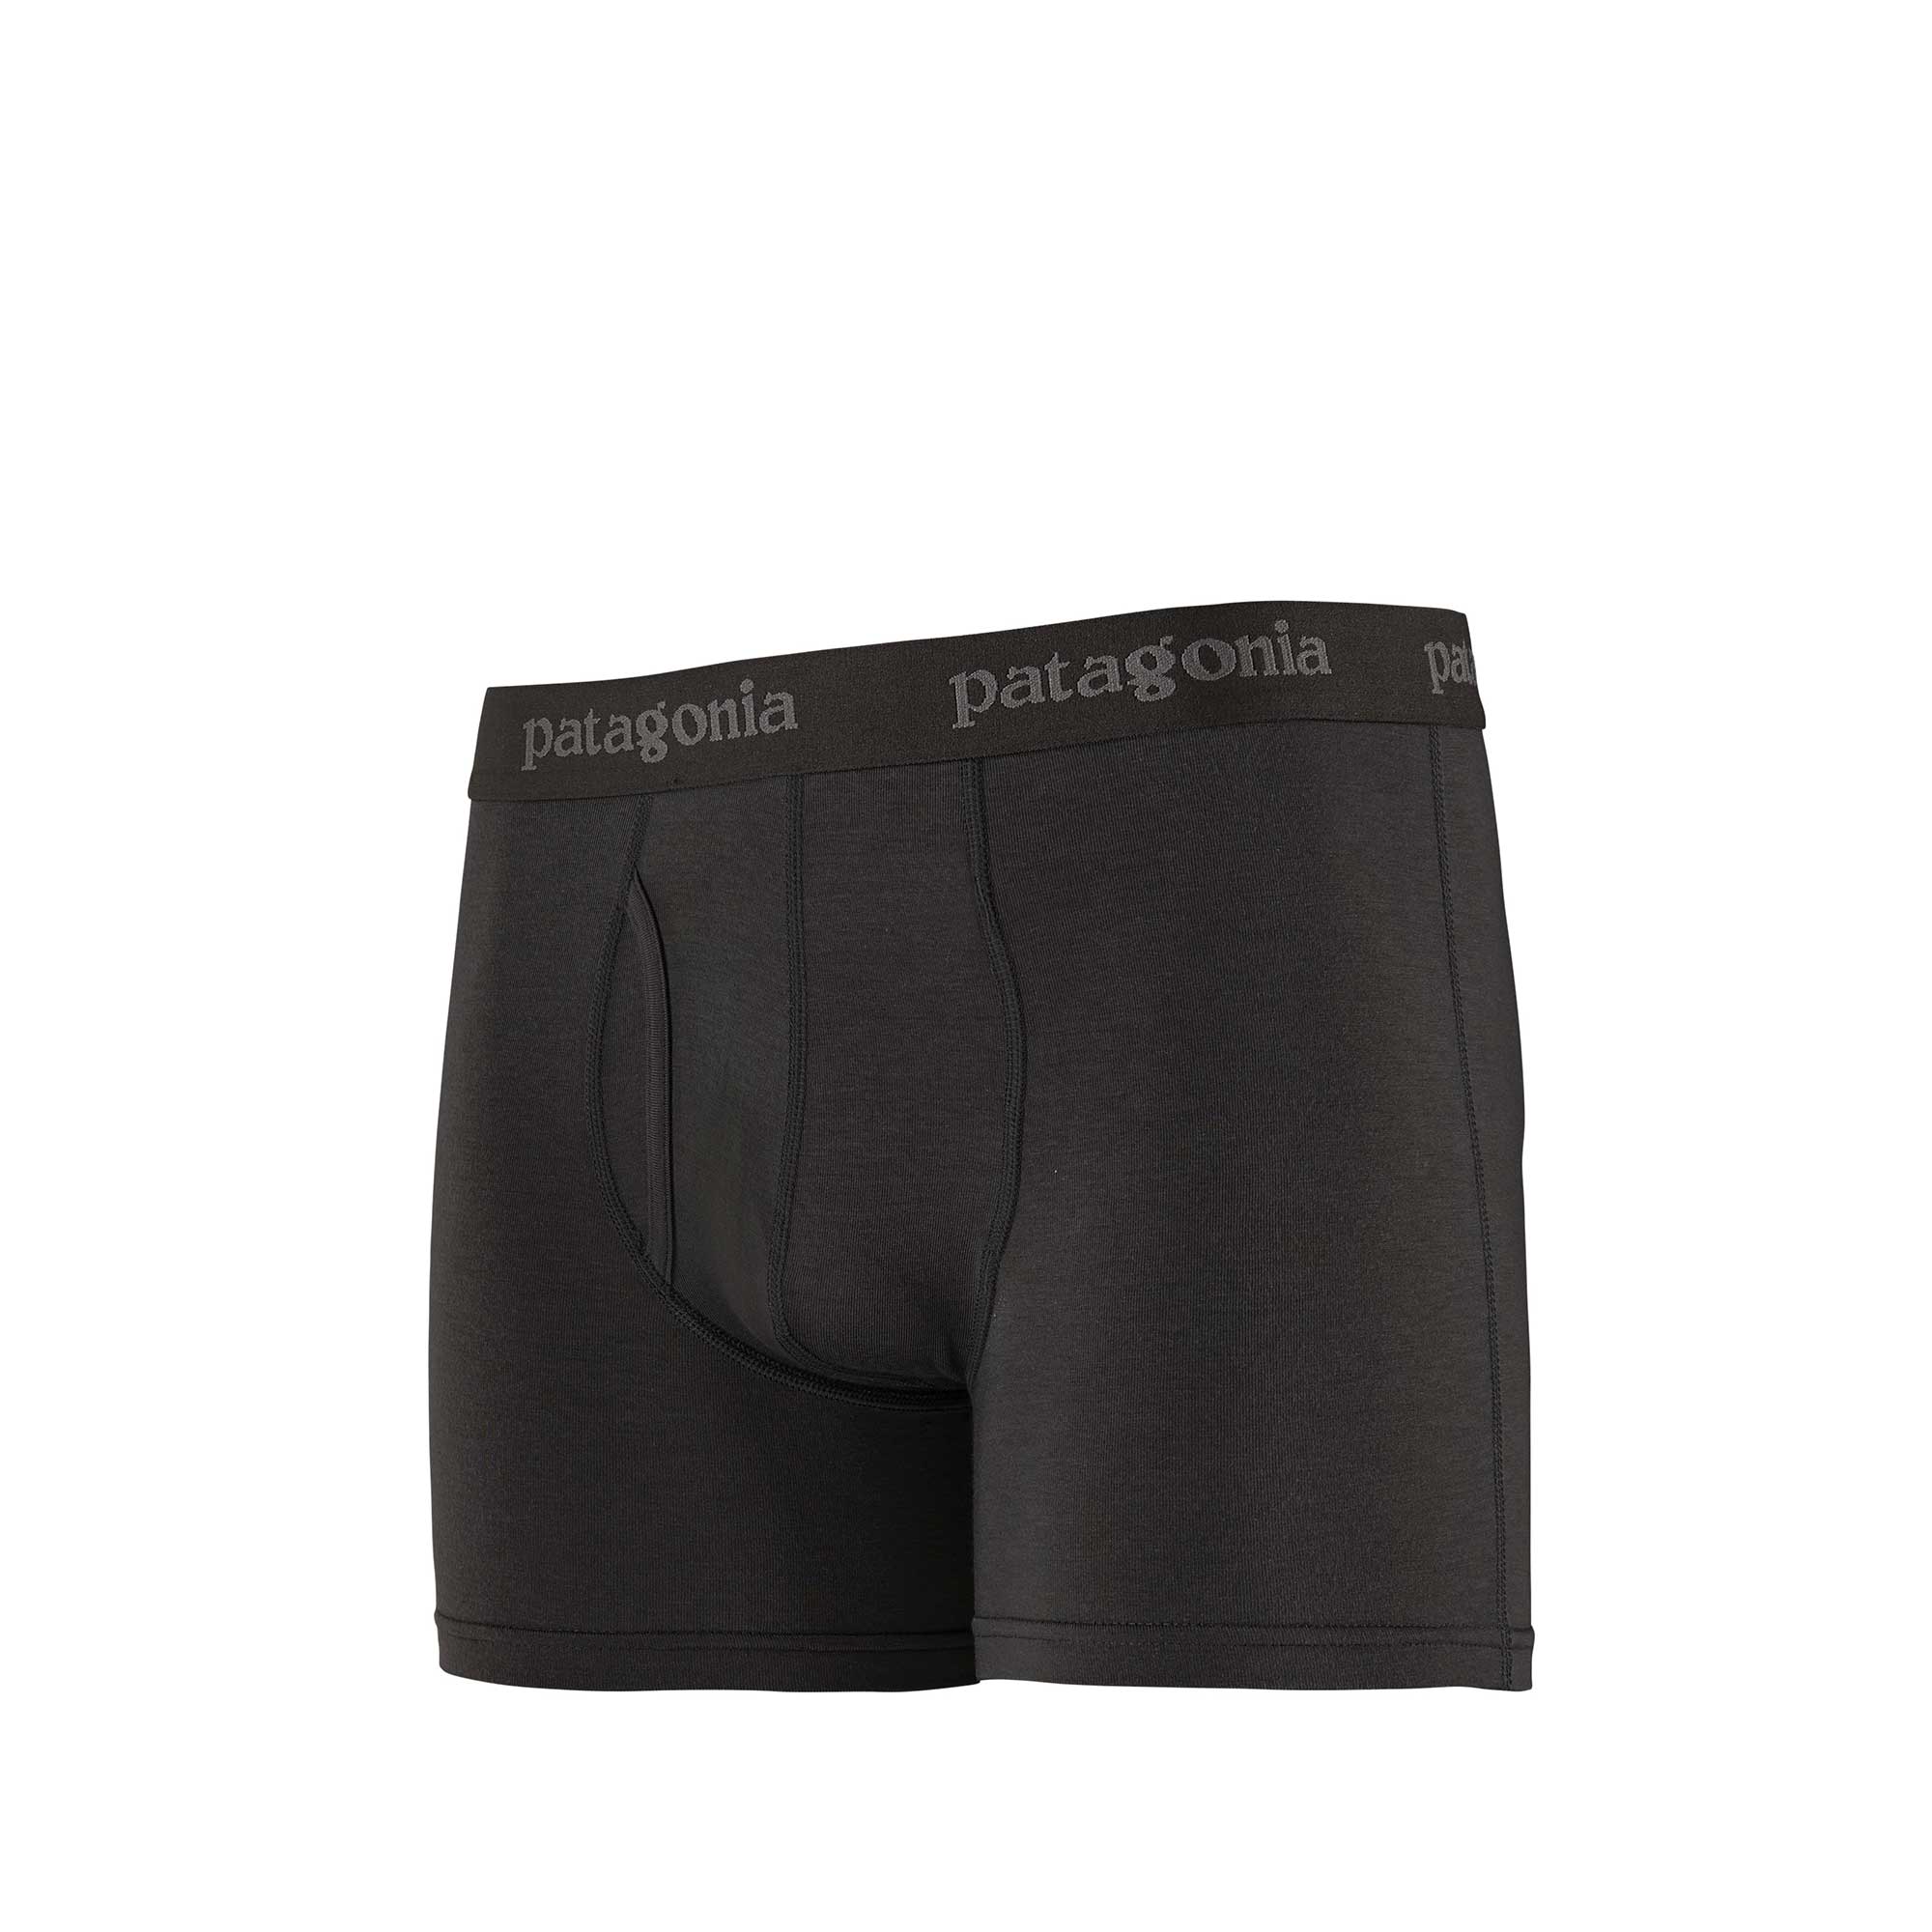 men's undergarments – Norwood